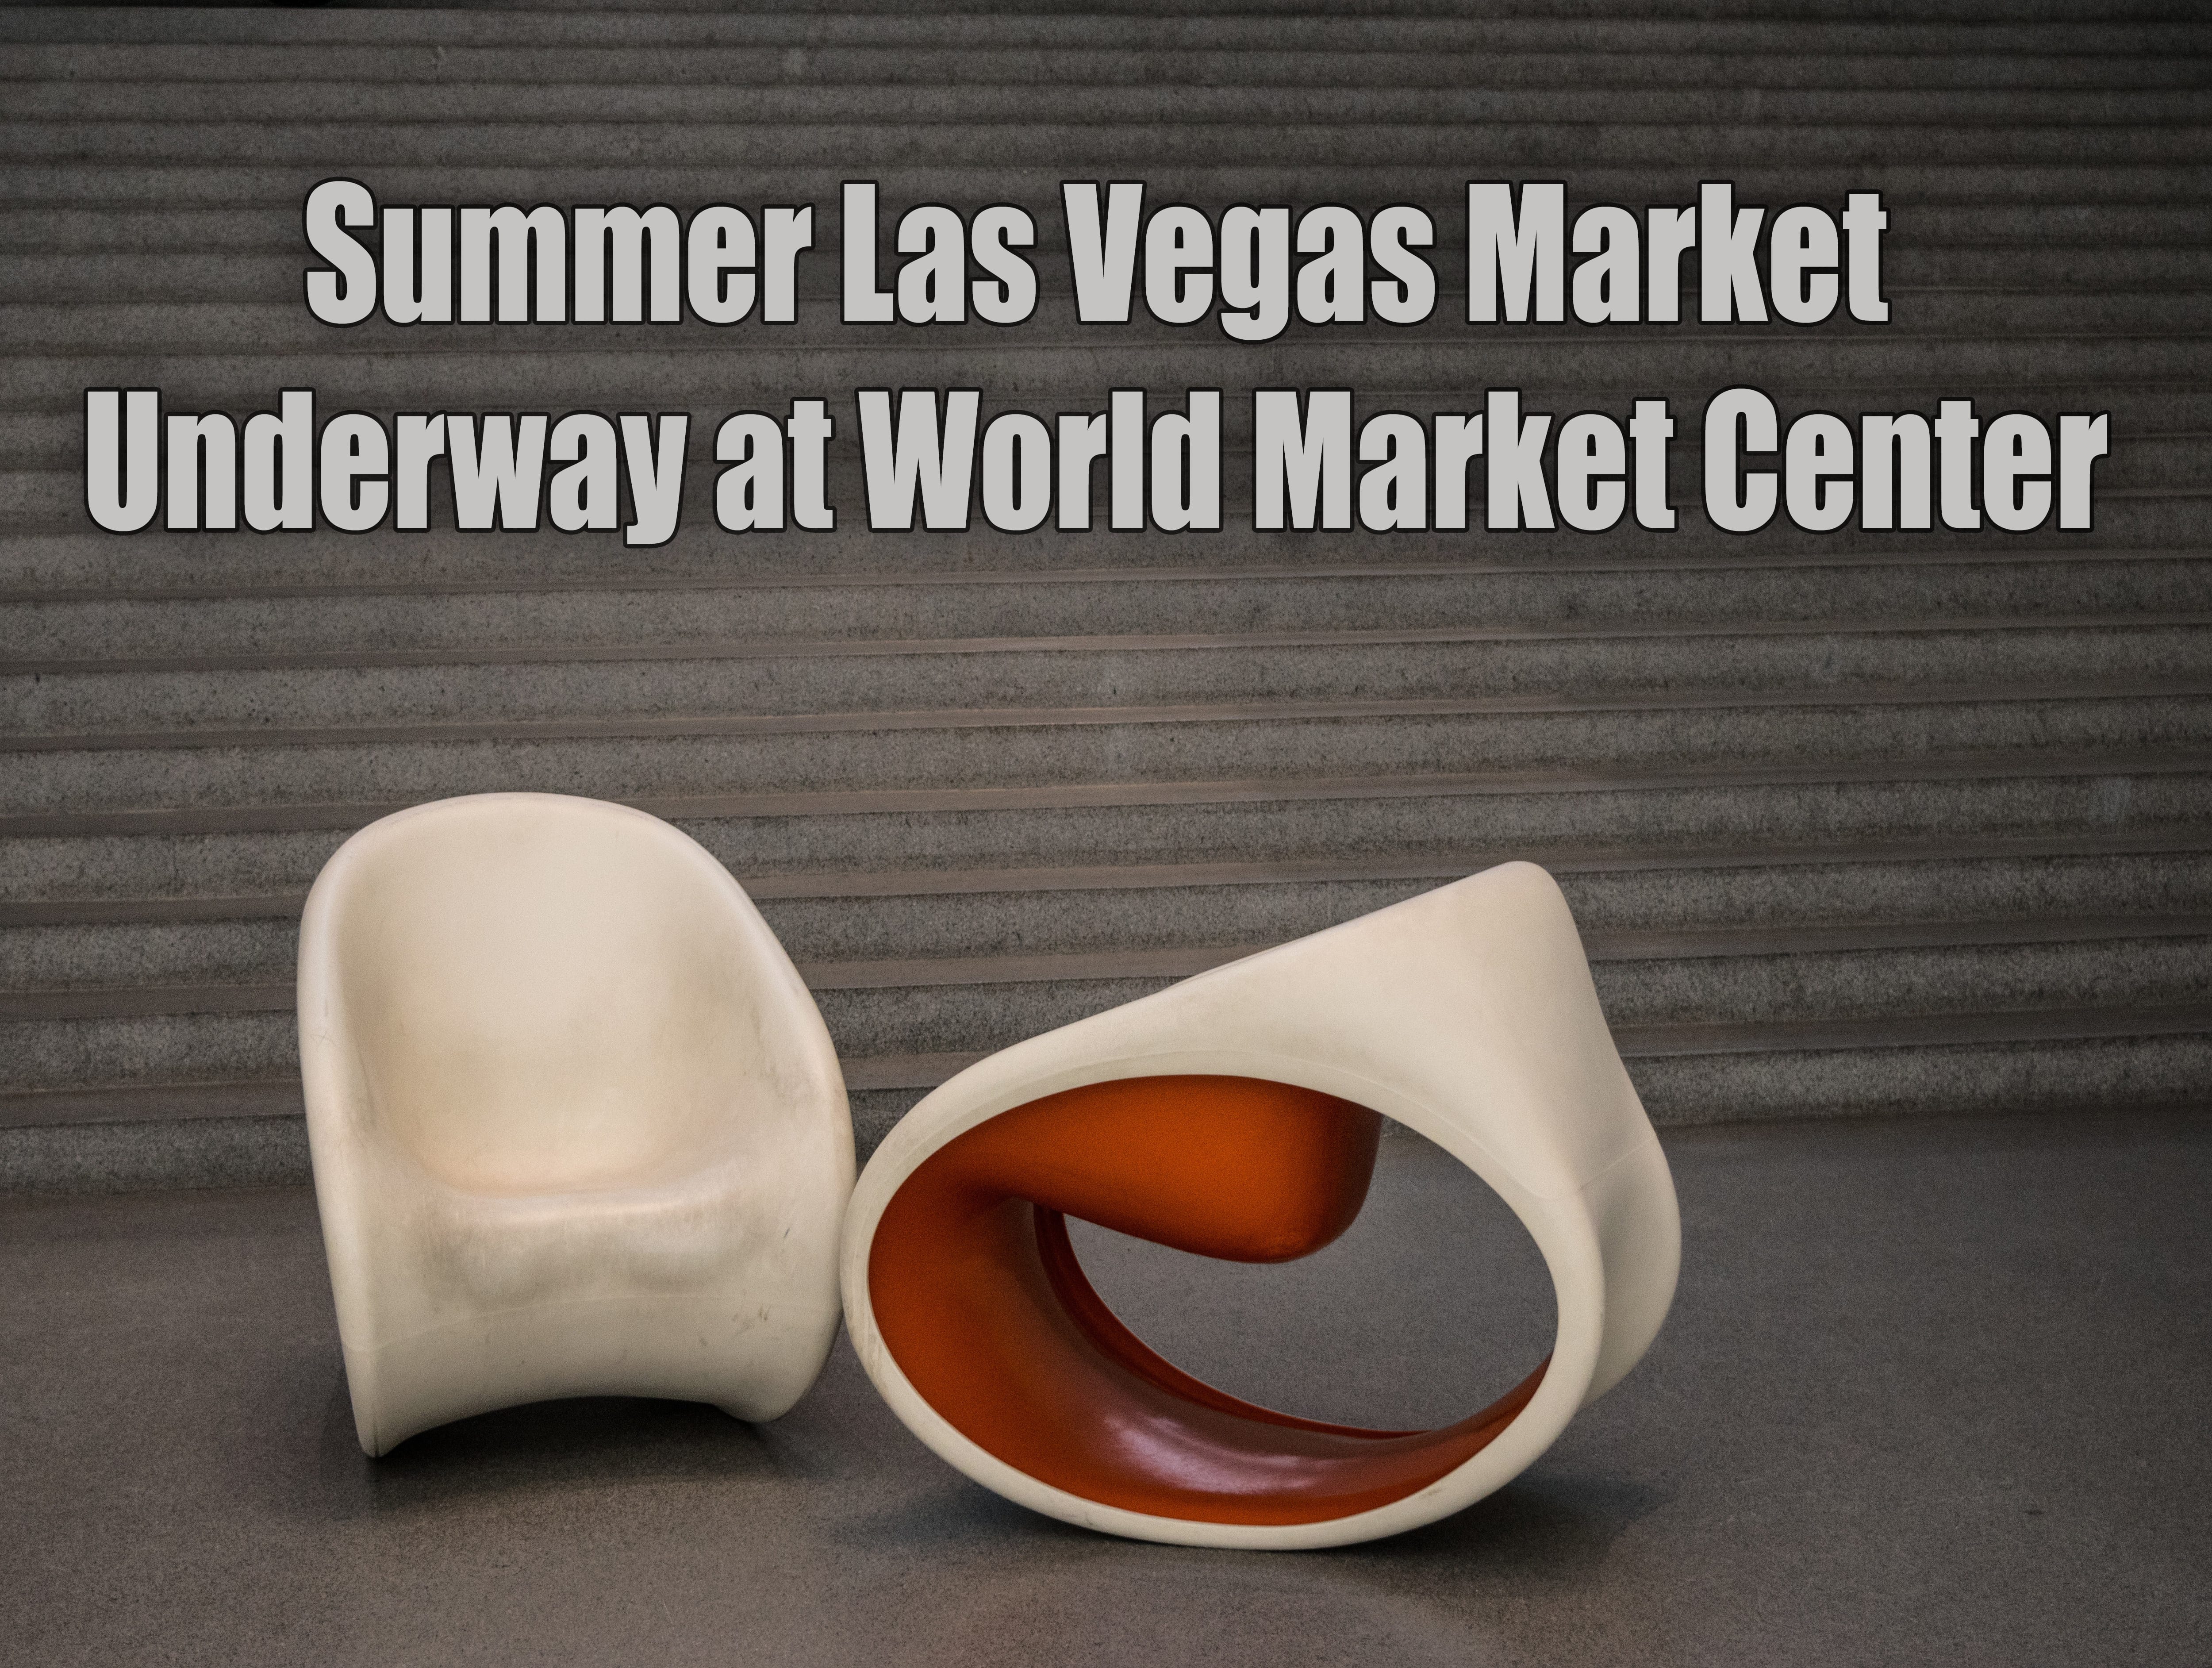 World Market Center Las Vegas.jpg